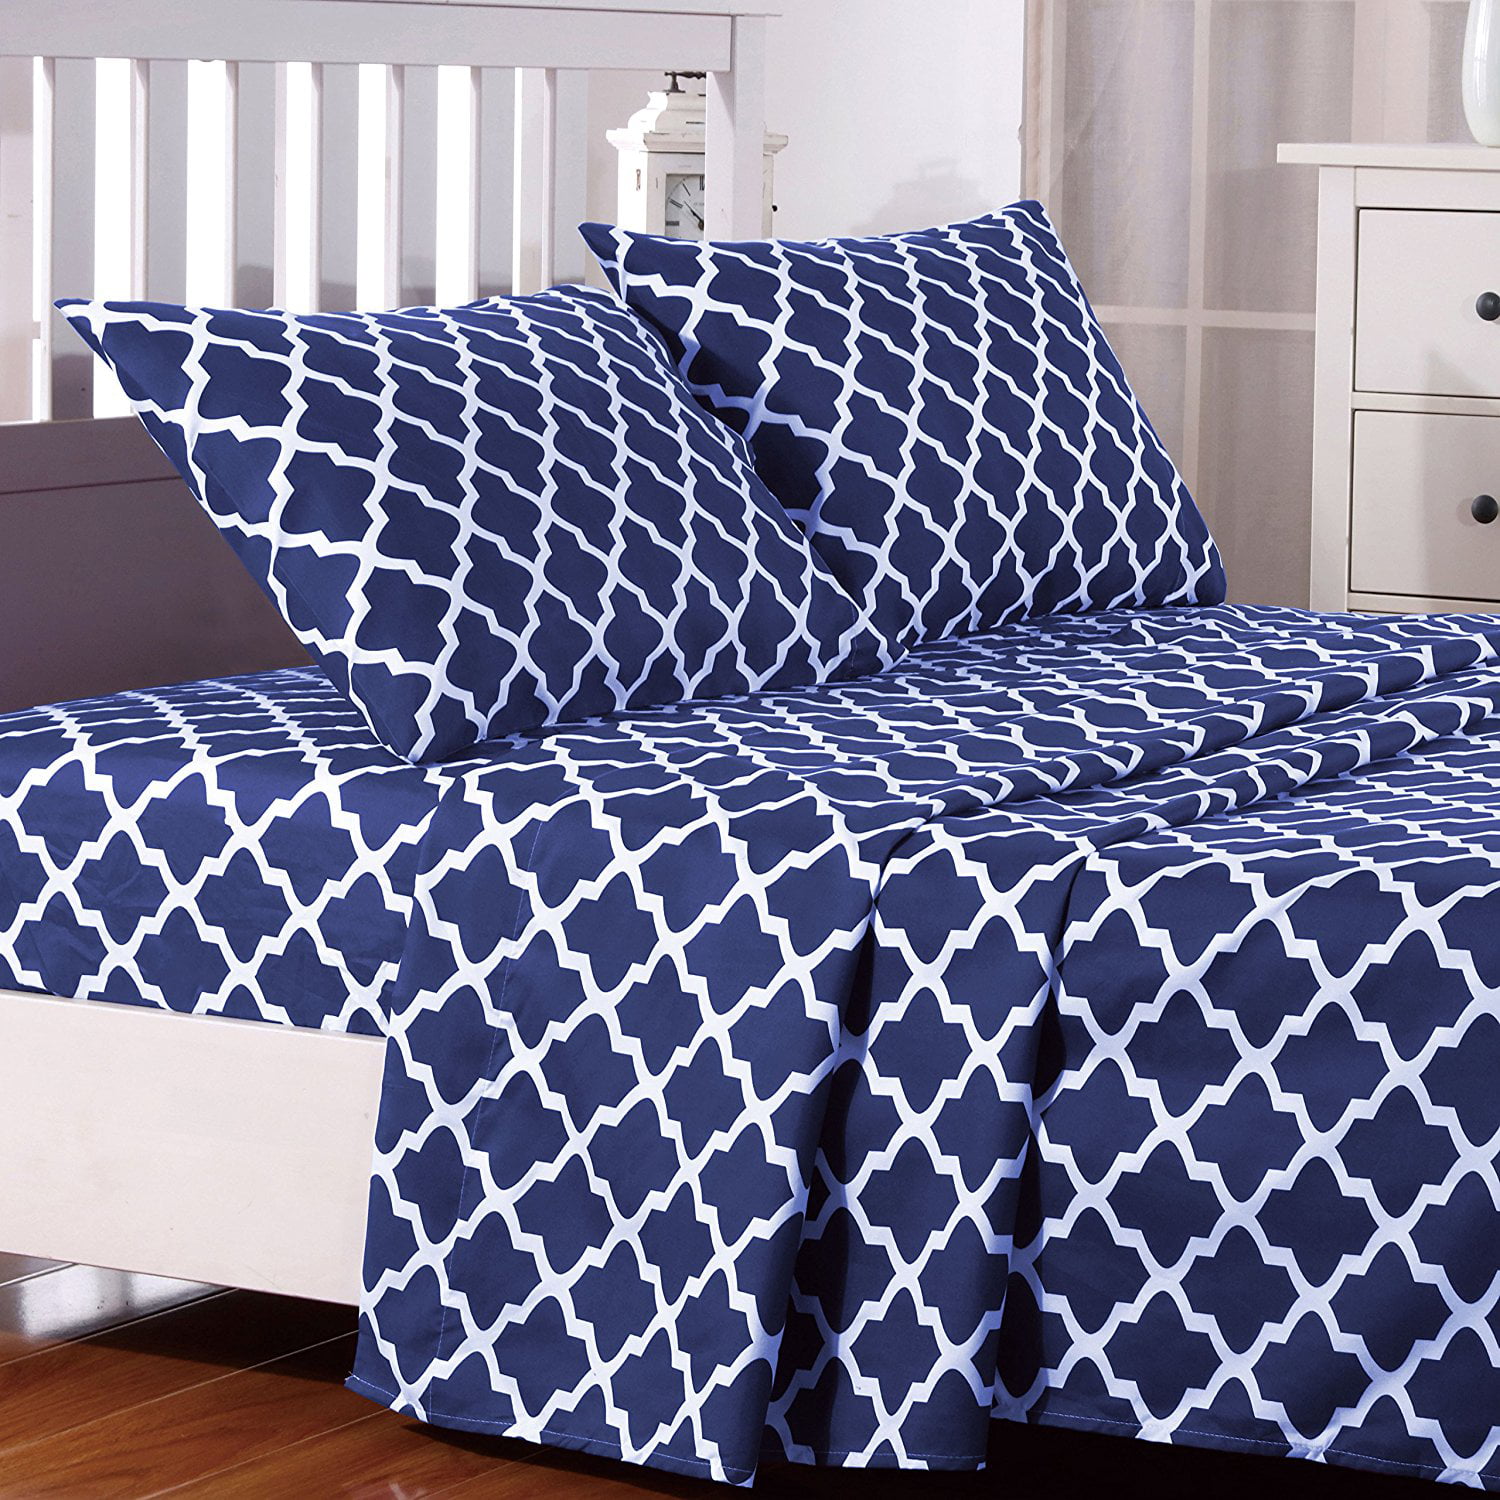 Lux Decor Collection Quatrefoil Bed Sheet Set Queen Navy Blue 4 Piece Deep Pocket 1800